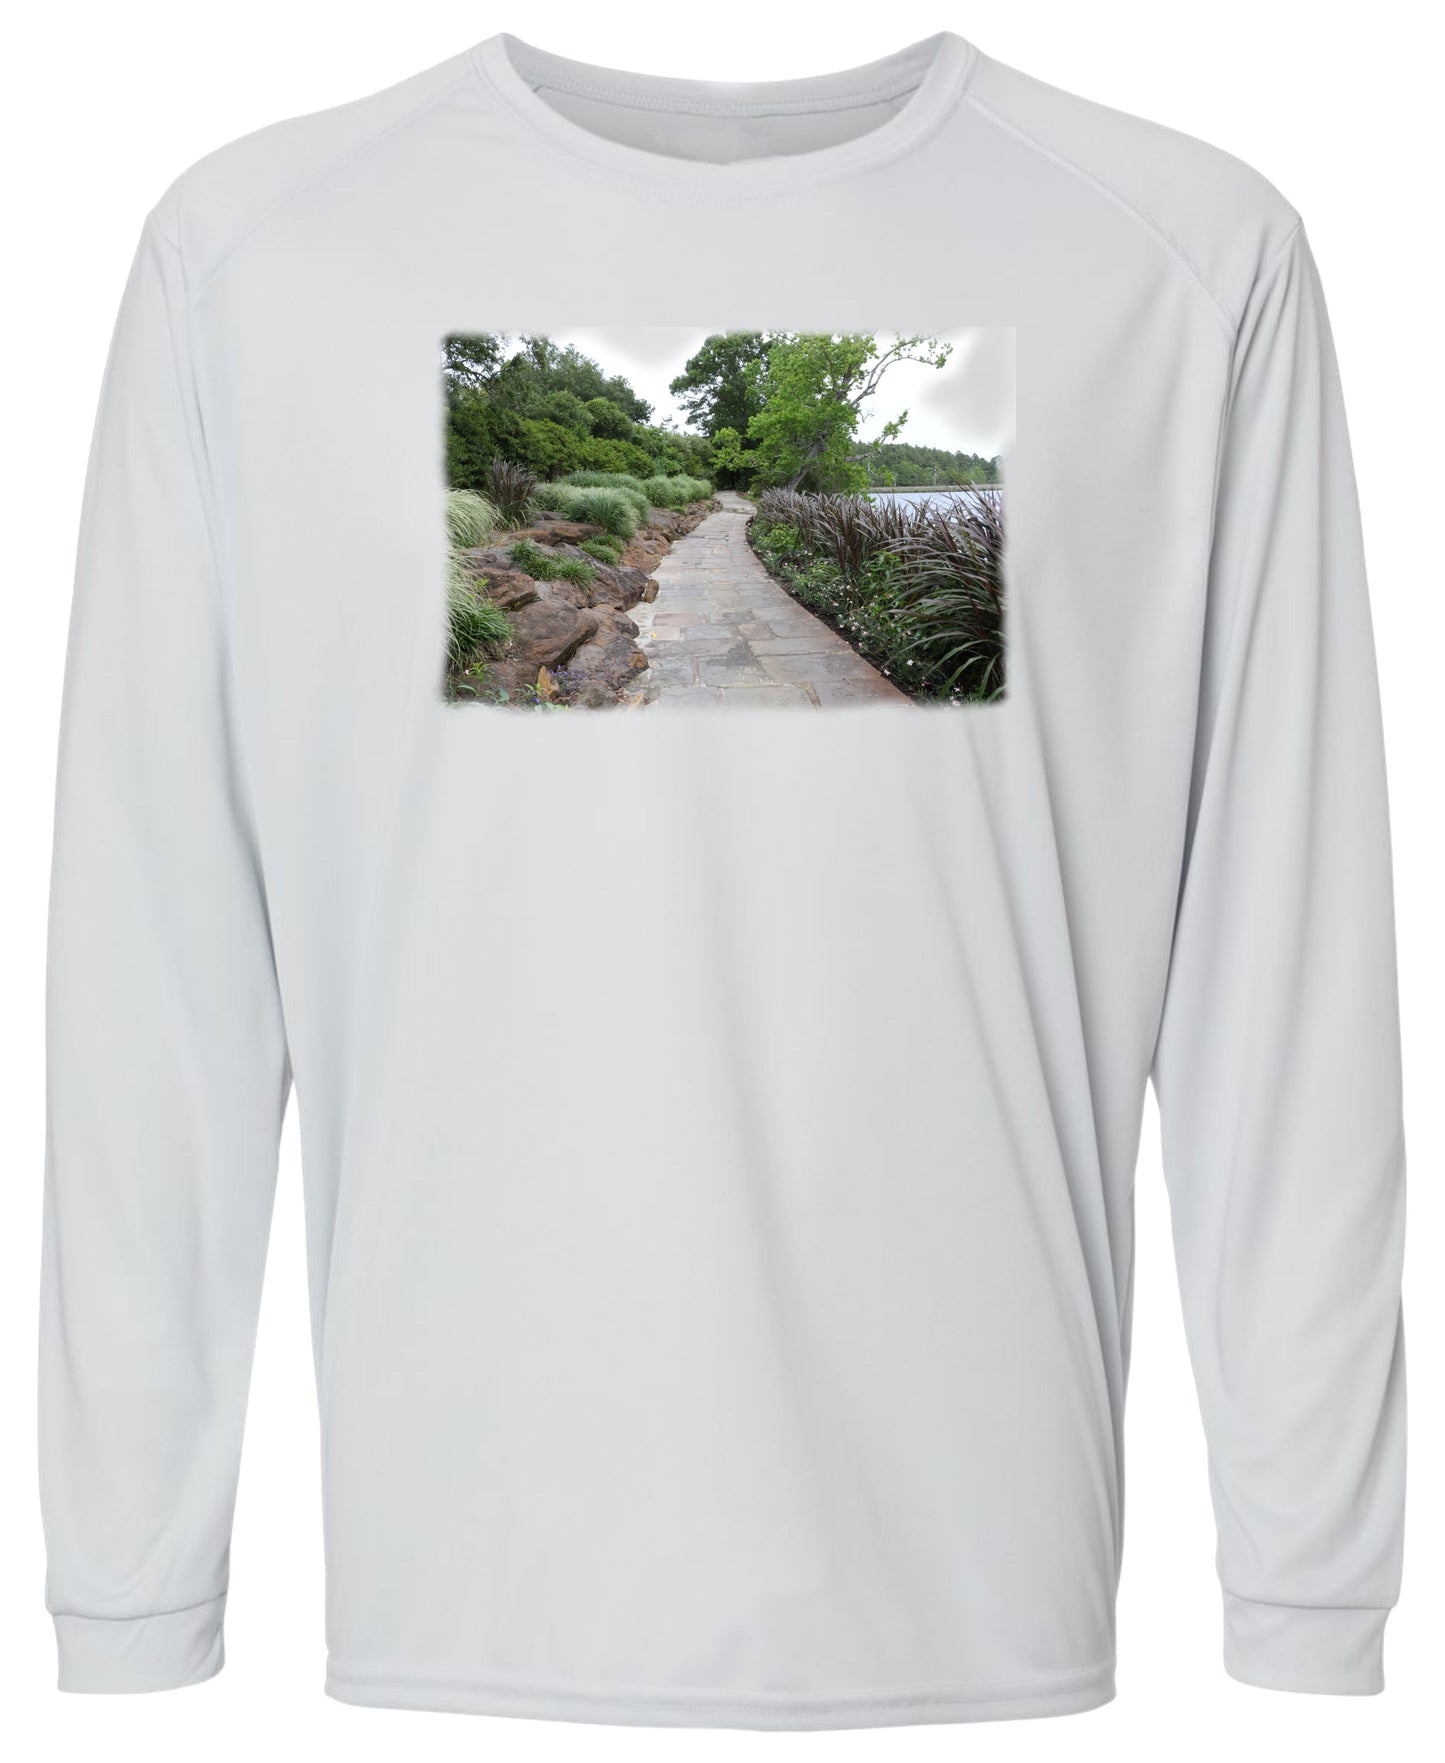 21 LW Ocean Sidewalk Long Sleeve UPF 50+ Shirt Gardening Shirt Lake Shirt Outdoor Shirt Casual Shirt